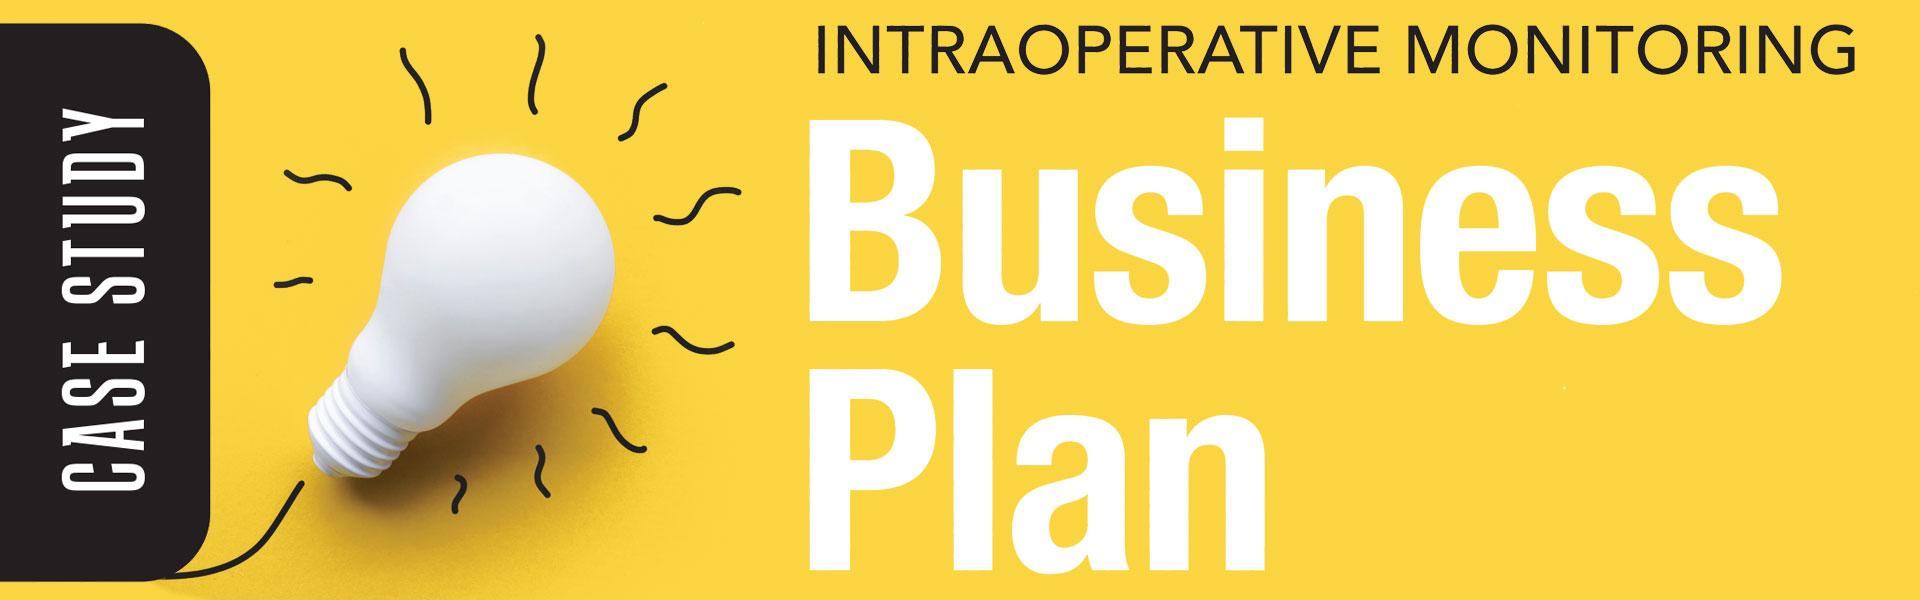 Intraoperative Monitoring Business Plan